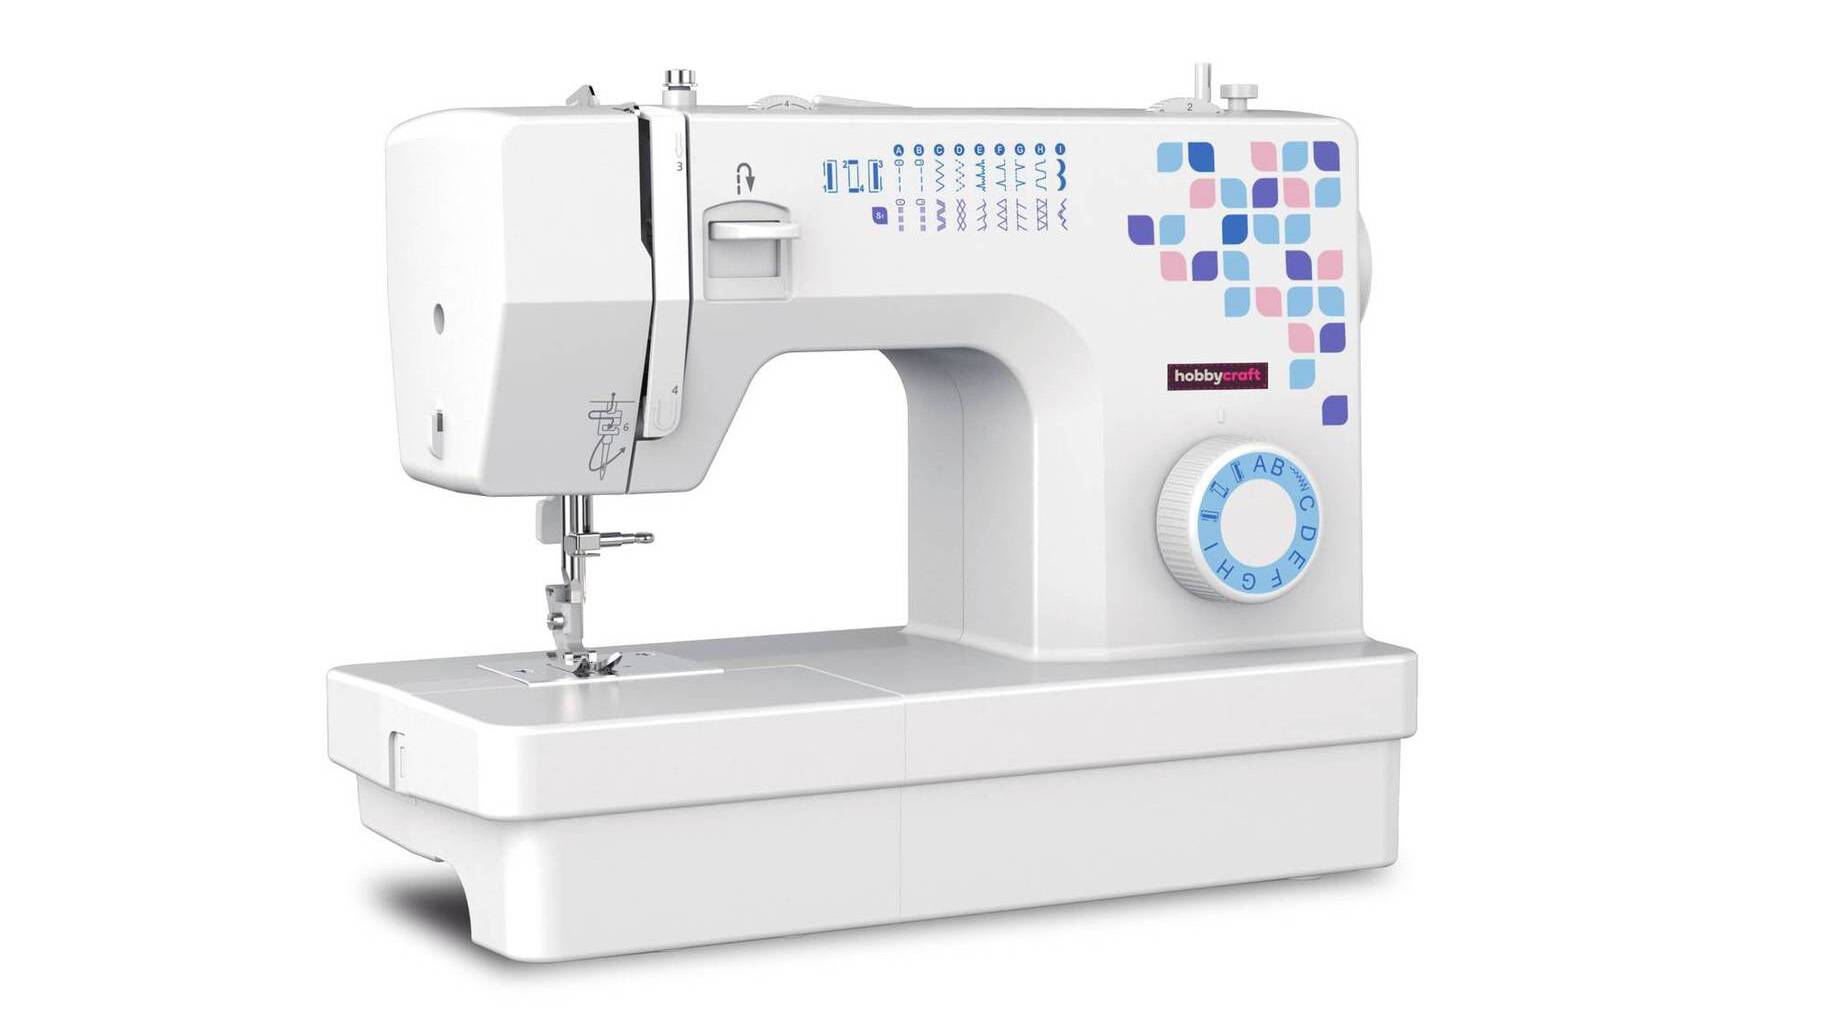 Hobbycraft sewing machine